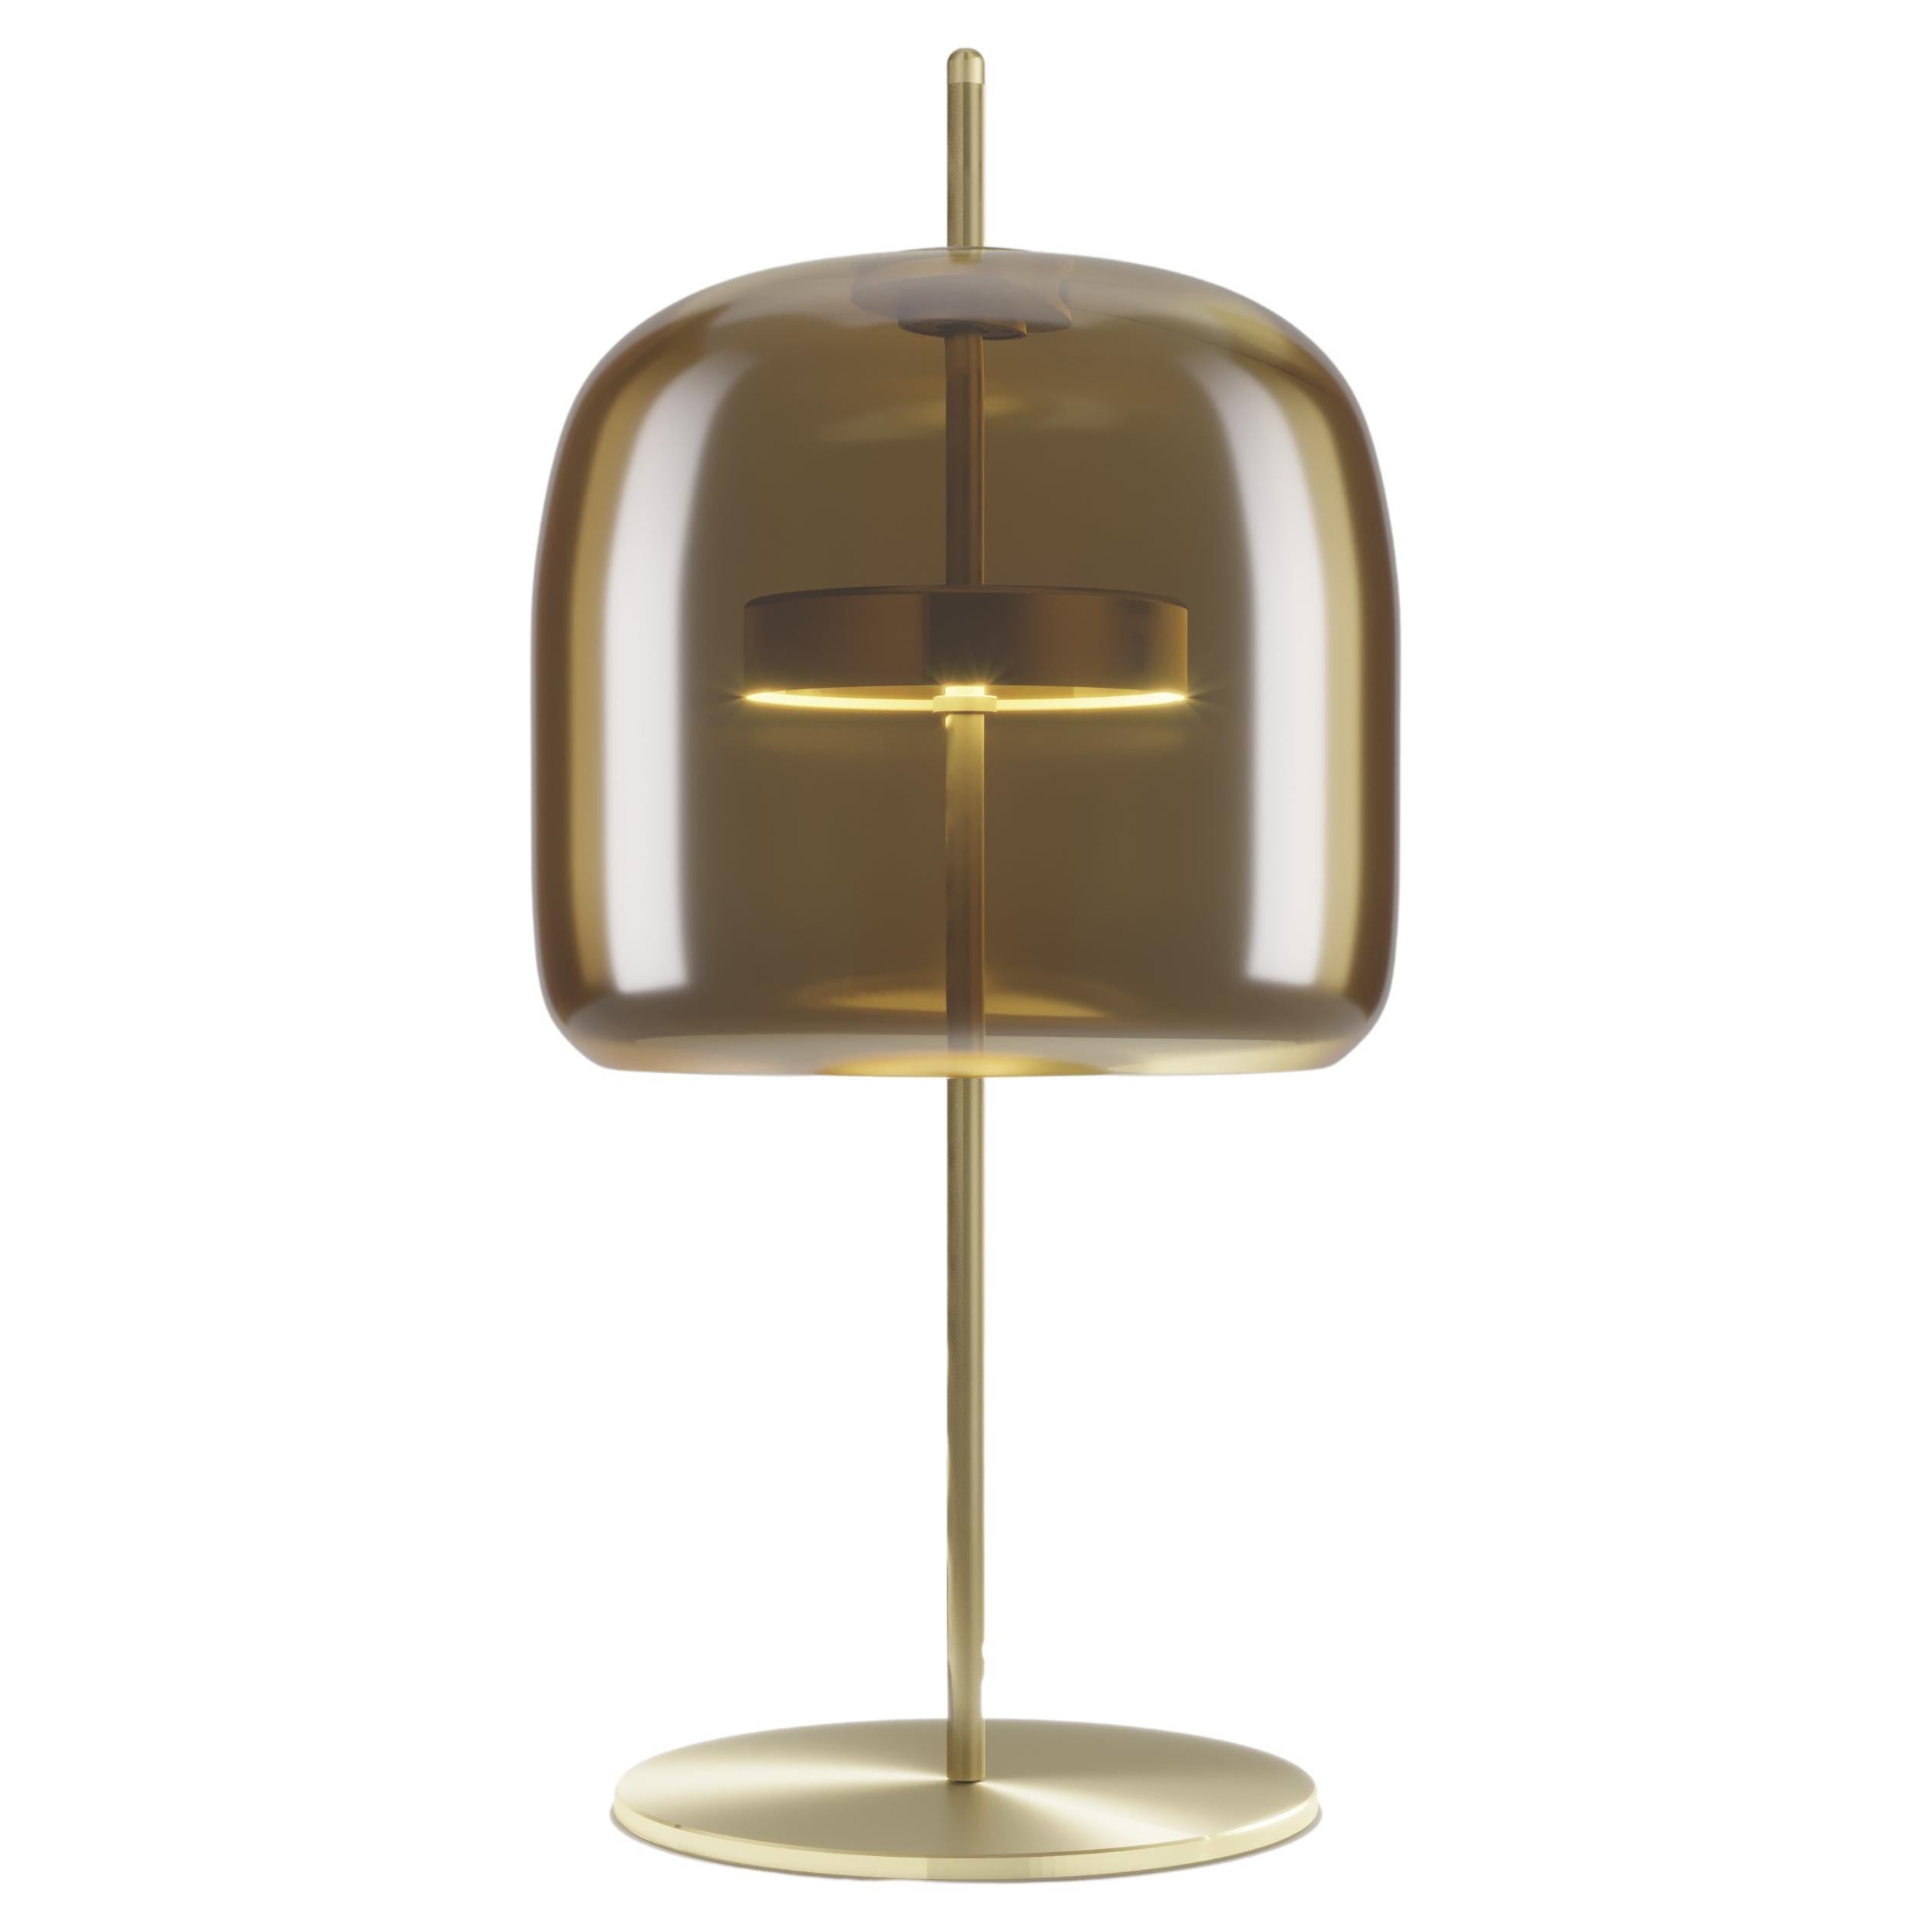 Vistosi Jube Table Lamp in Burned Earth Transparent Glass And Matt Gold Finish